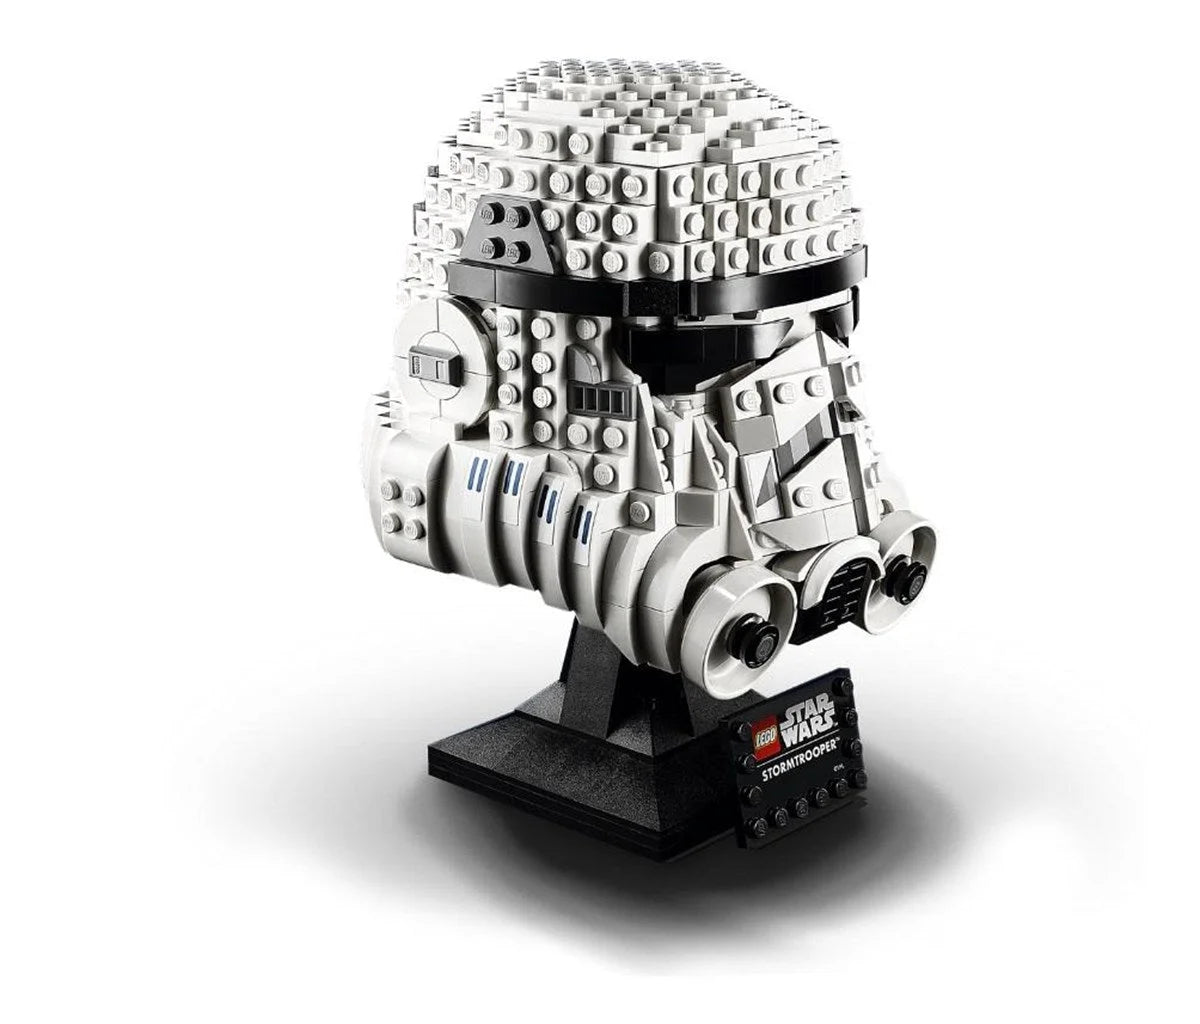 Lego Star Wars Stormtrooper Helmet 75276 | Toysall